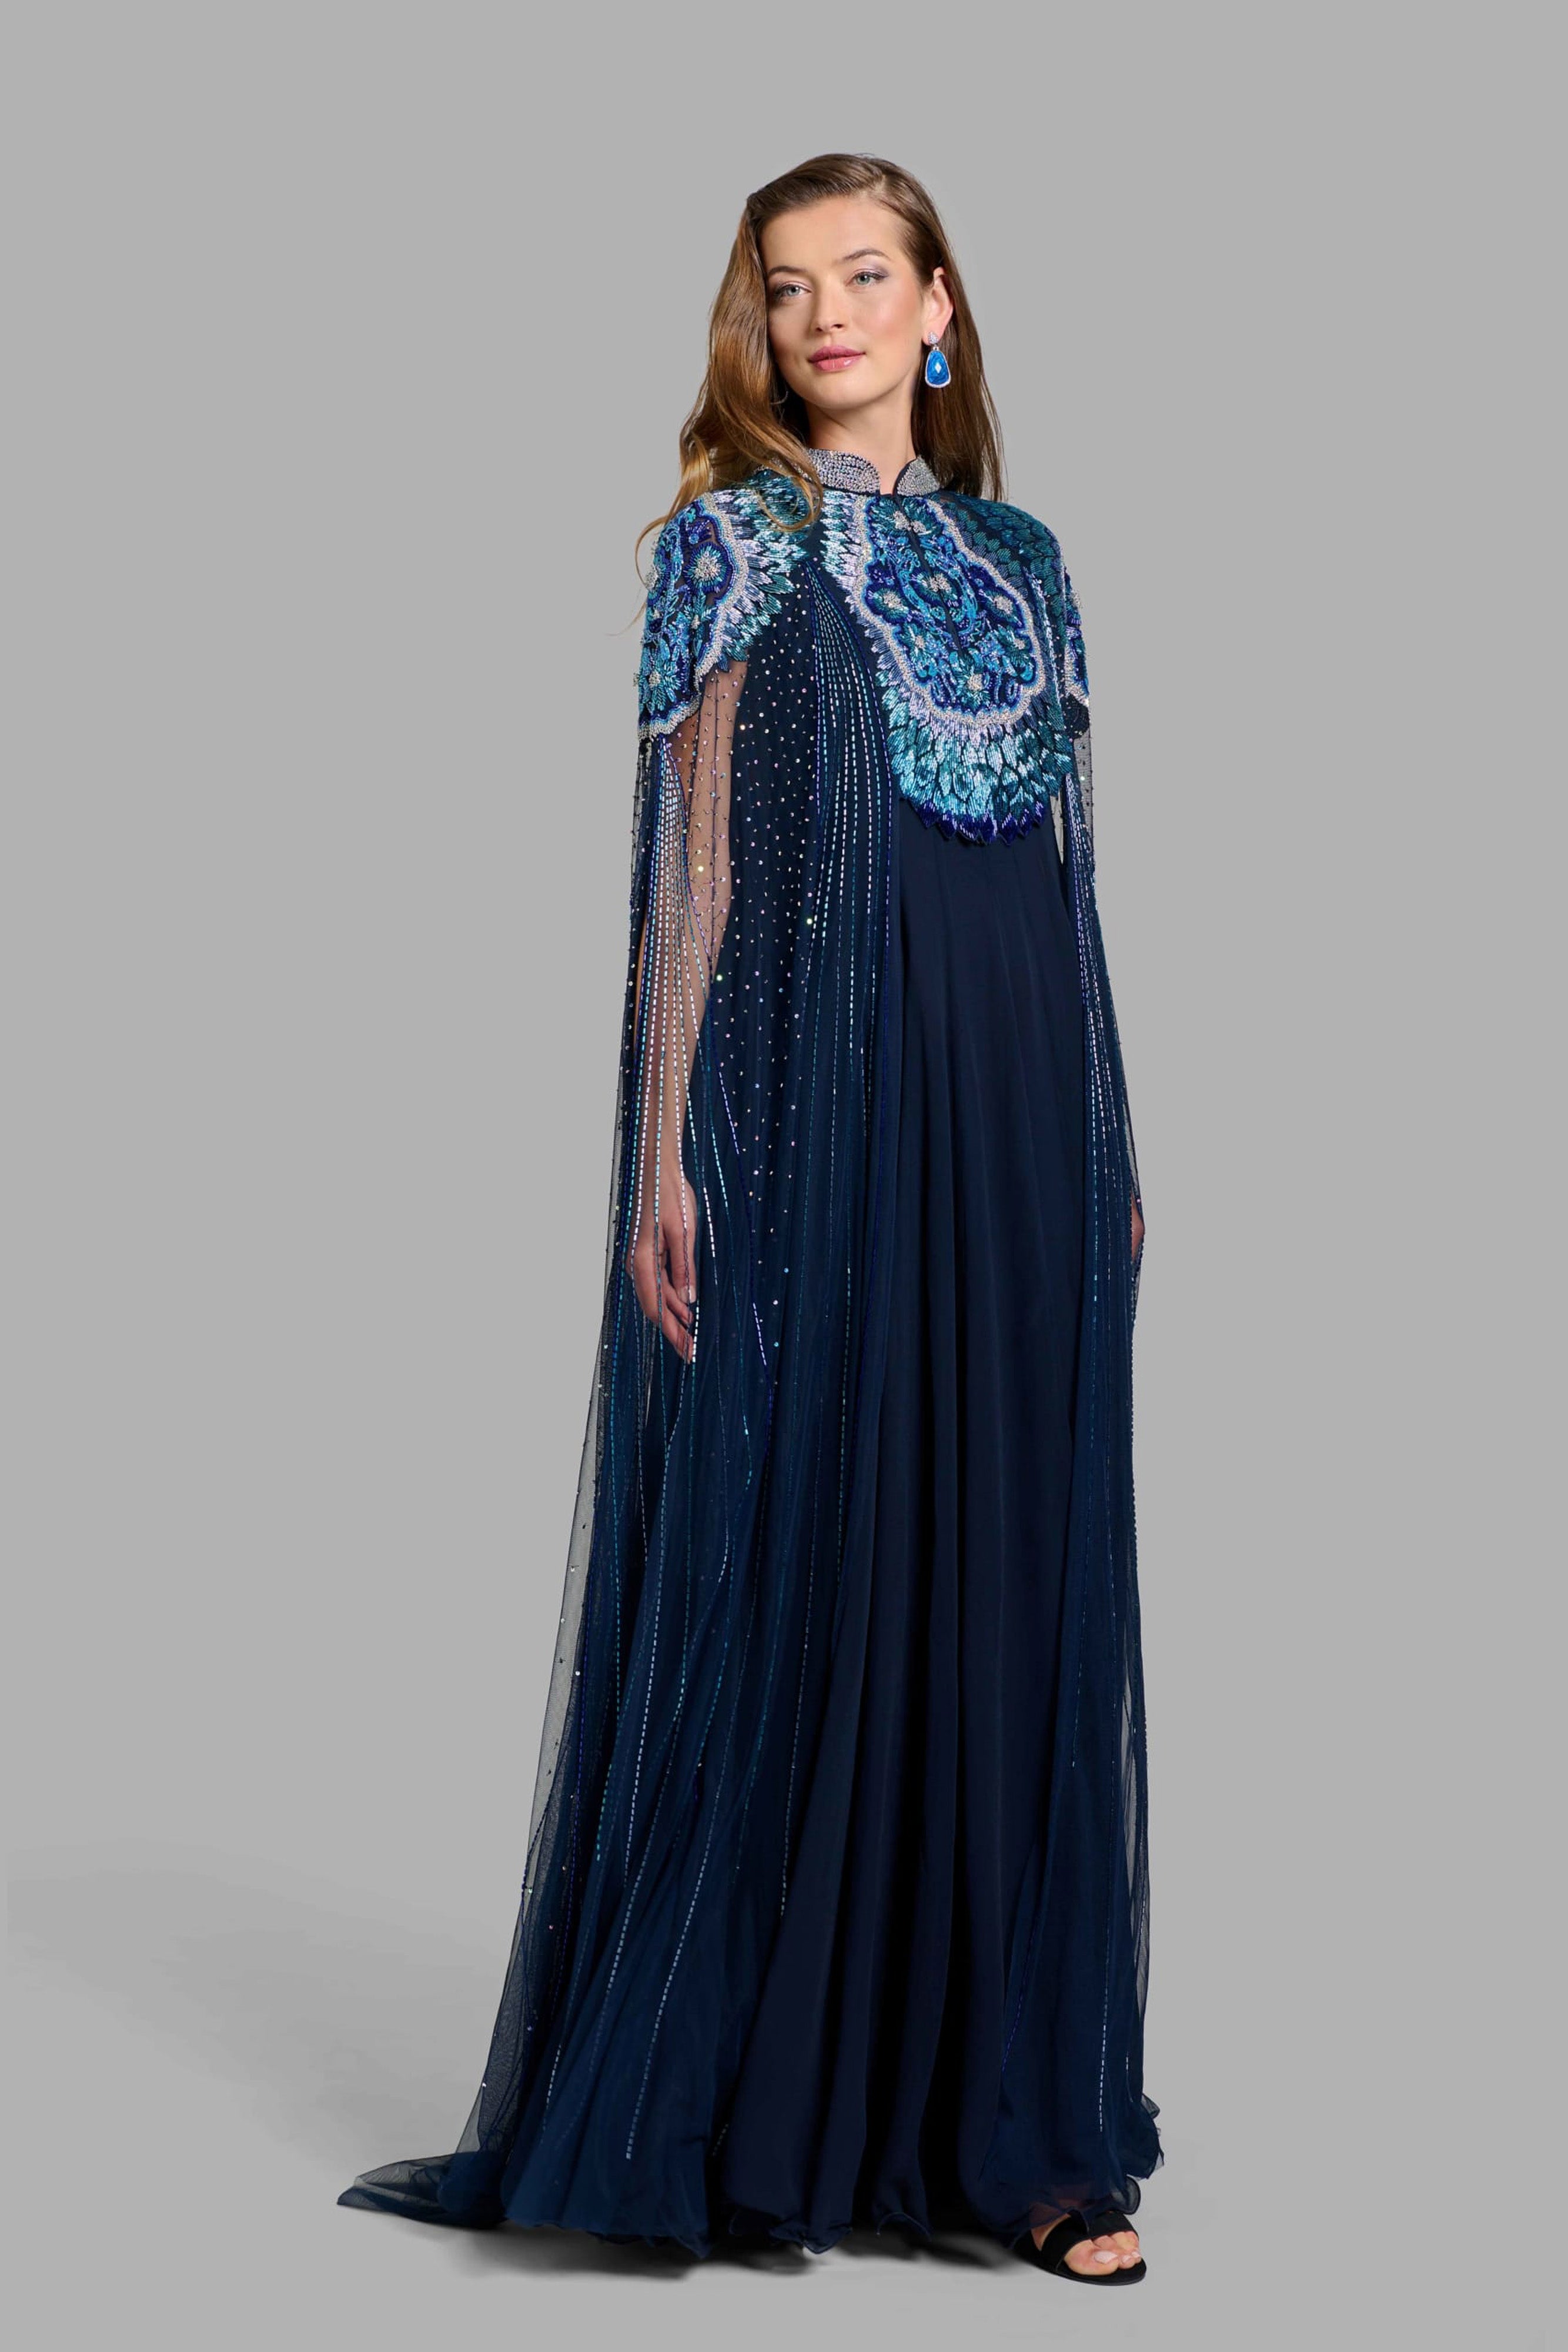 The Peacock Dress